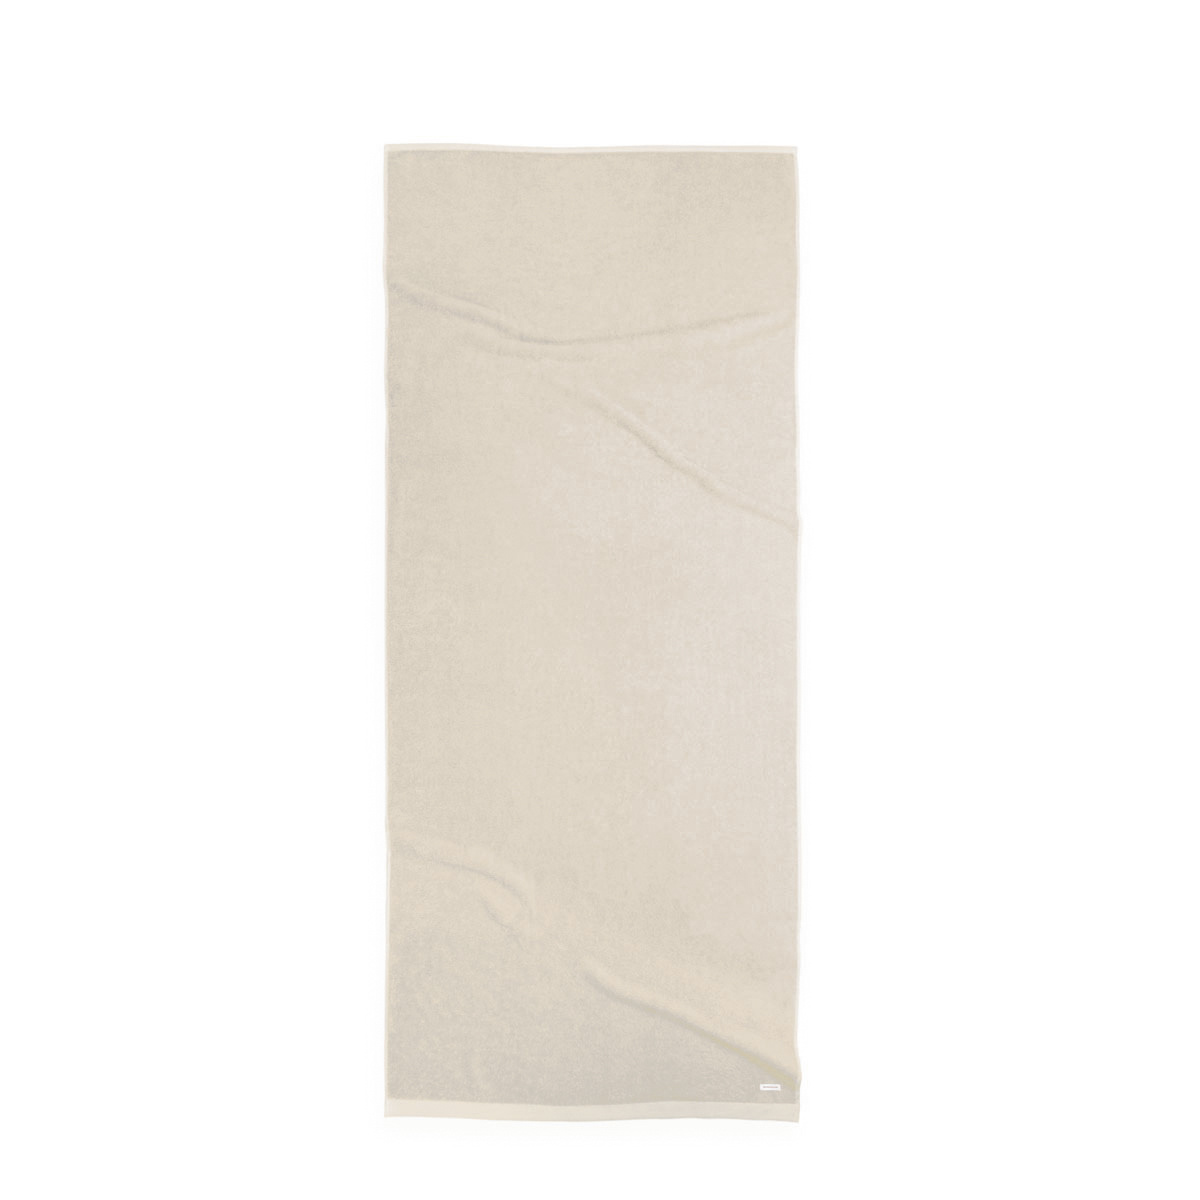 Tom Tailor Szauna Sunny Sand törölköző, 80 x 200cm, 80 x 200 cm